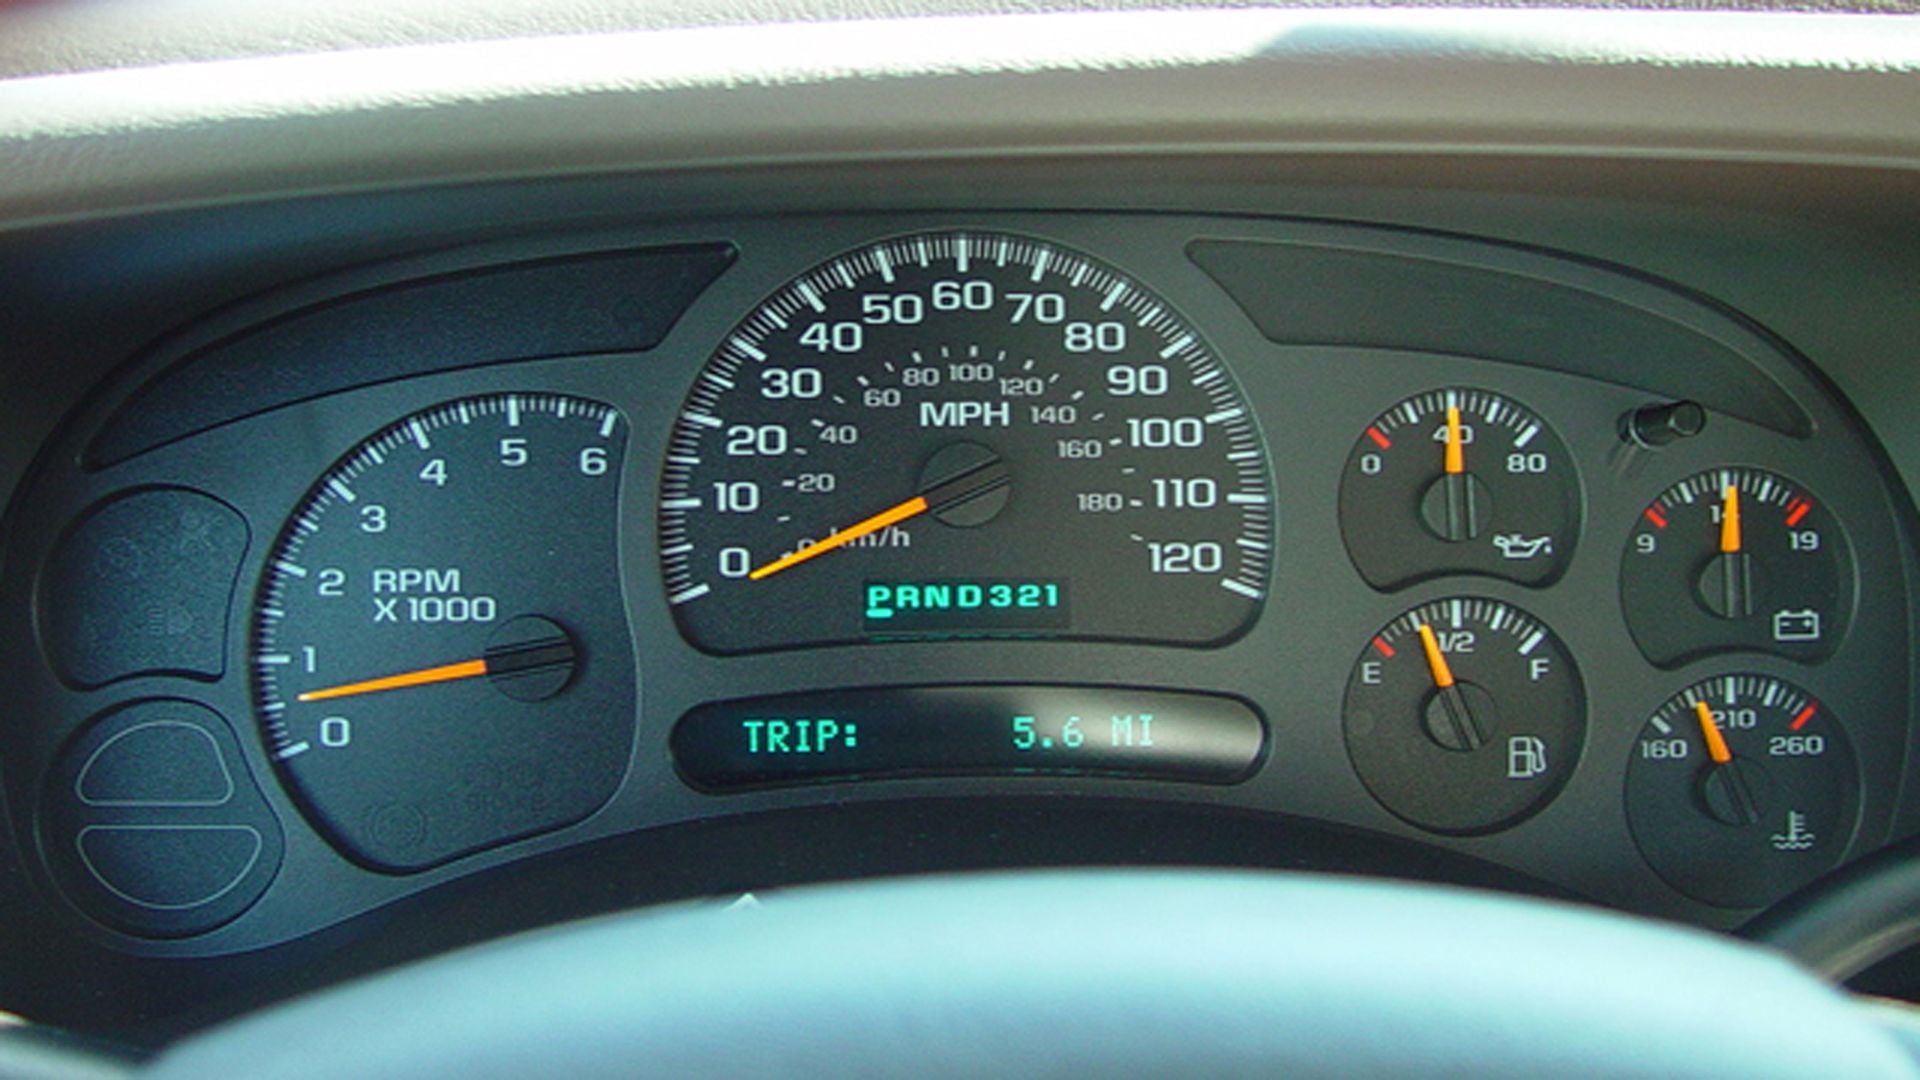 1999-2007 Chevy Silverado Instrument Gauge Cluster Speedometer Dash Panel REPAIR 